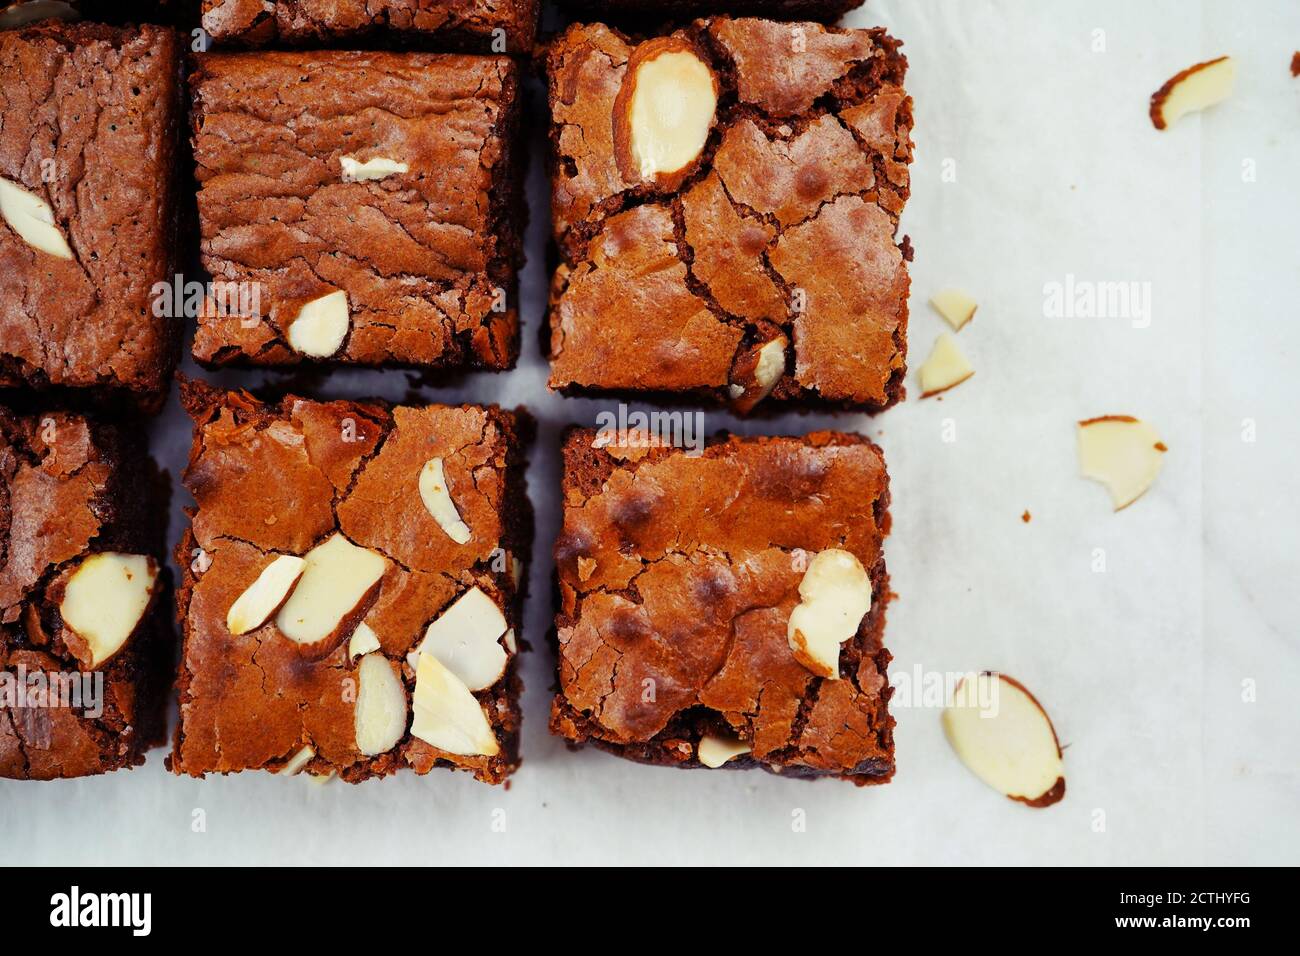 Glutenfreie Schokolade Fudge Brownies, selektive Fokus Stockfoto